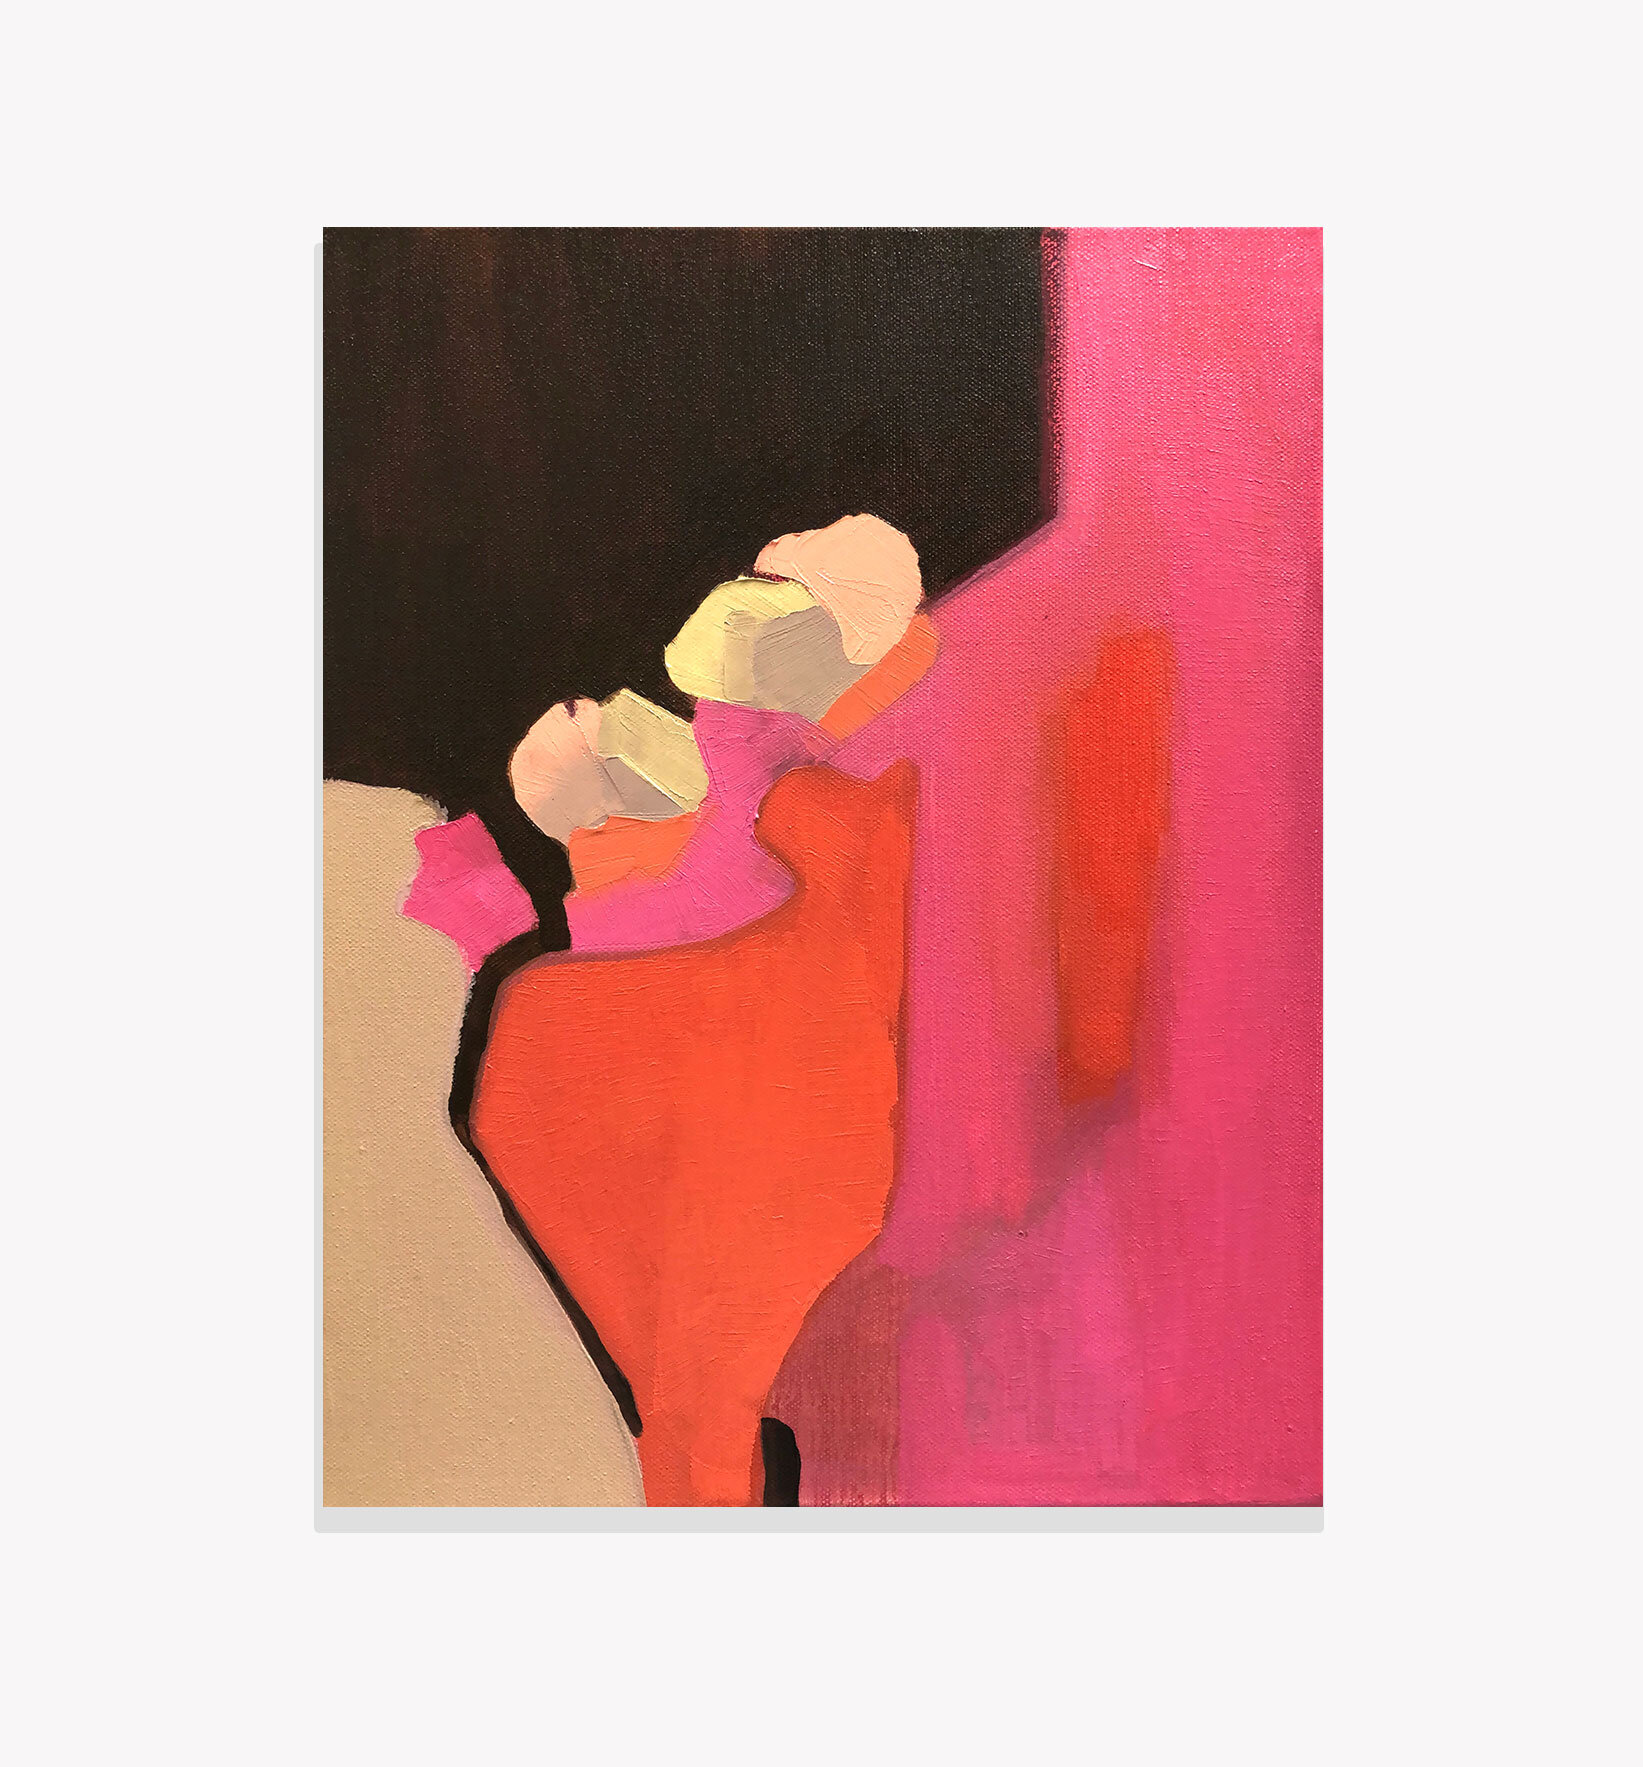   Twelve , Kristi Head 2020. Oil on canvas, 14 x 1 1 inches. 